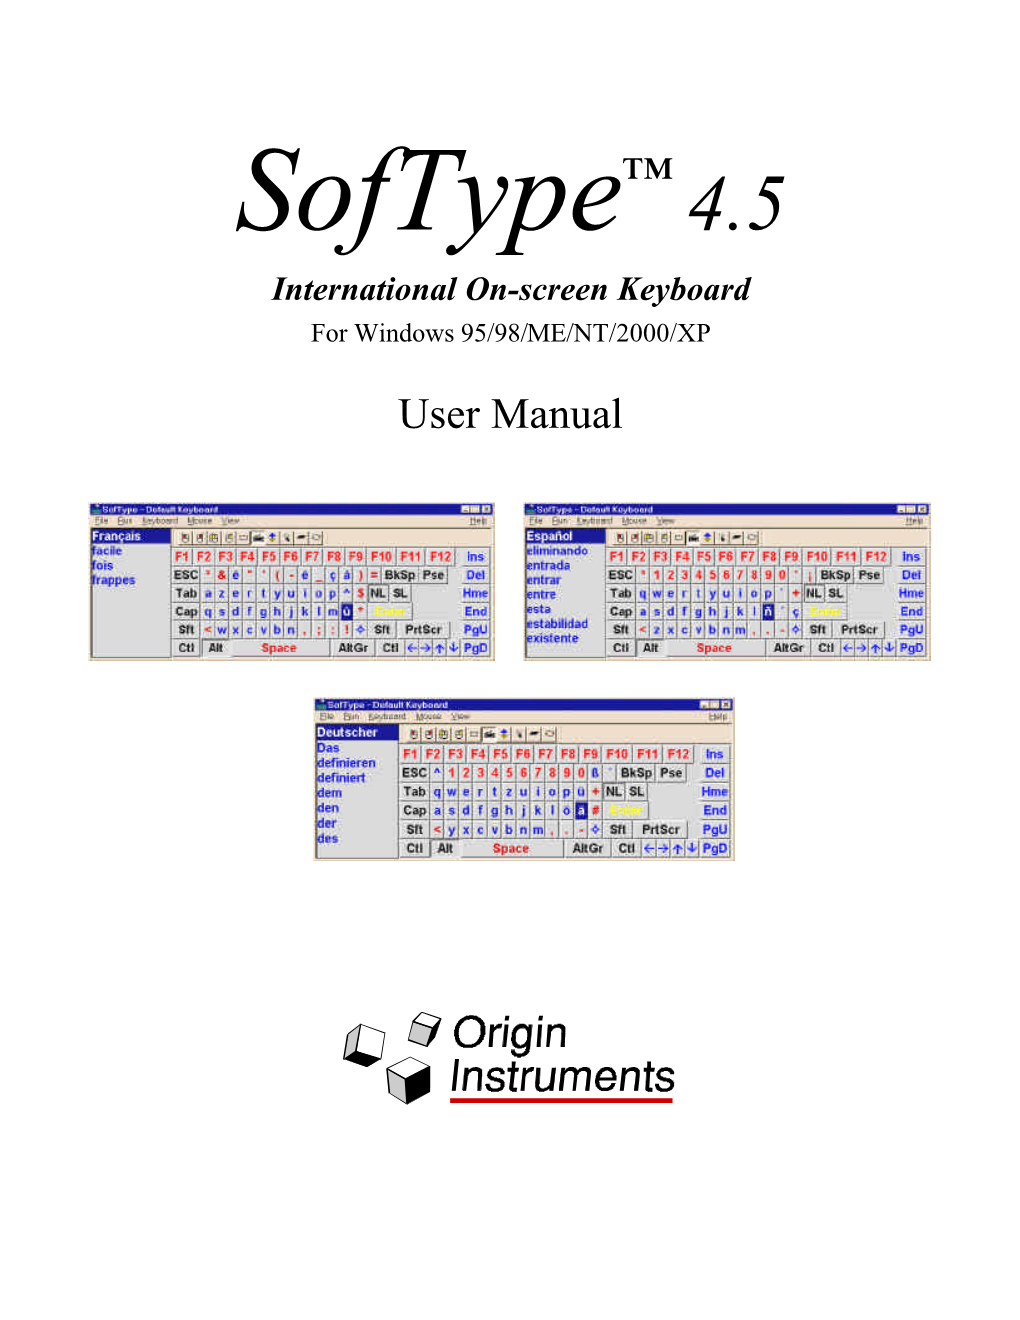 Softype 4.5 Manual